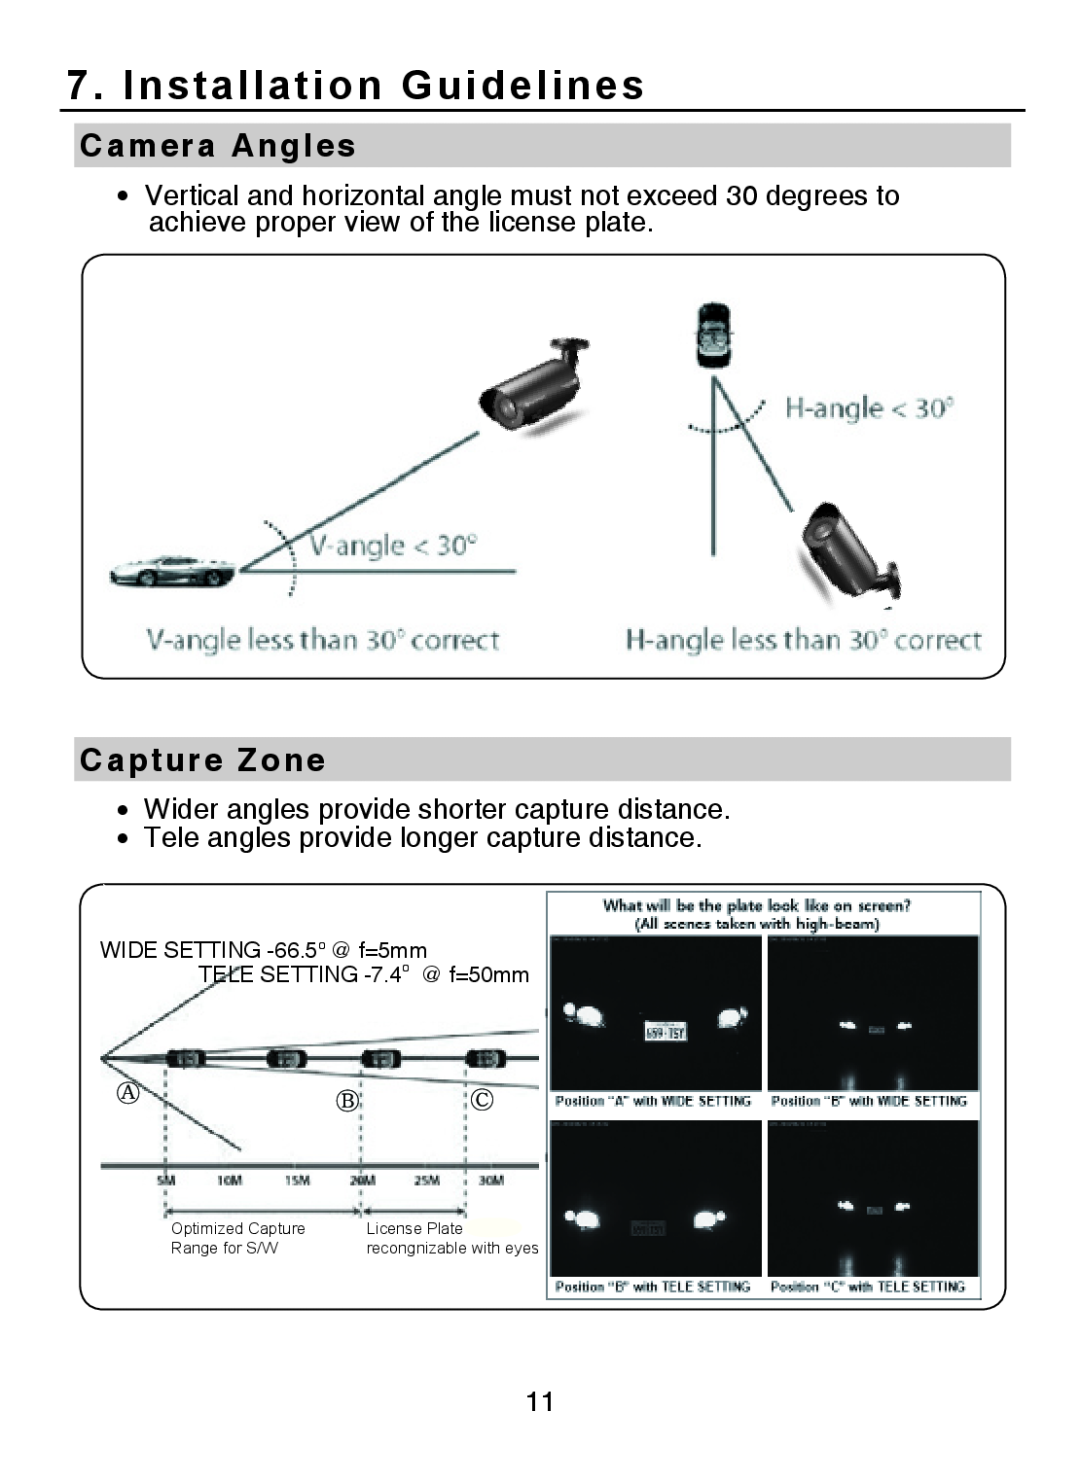 EverFocus EZ-PLATECAM2 Camera Angles, Capture Zone, Wider angles provide shorter capture distance, Installation Guidelines 